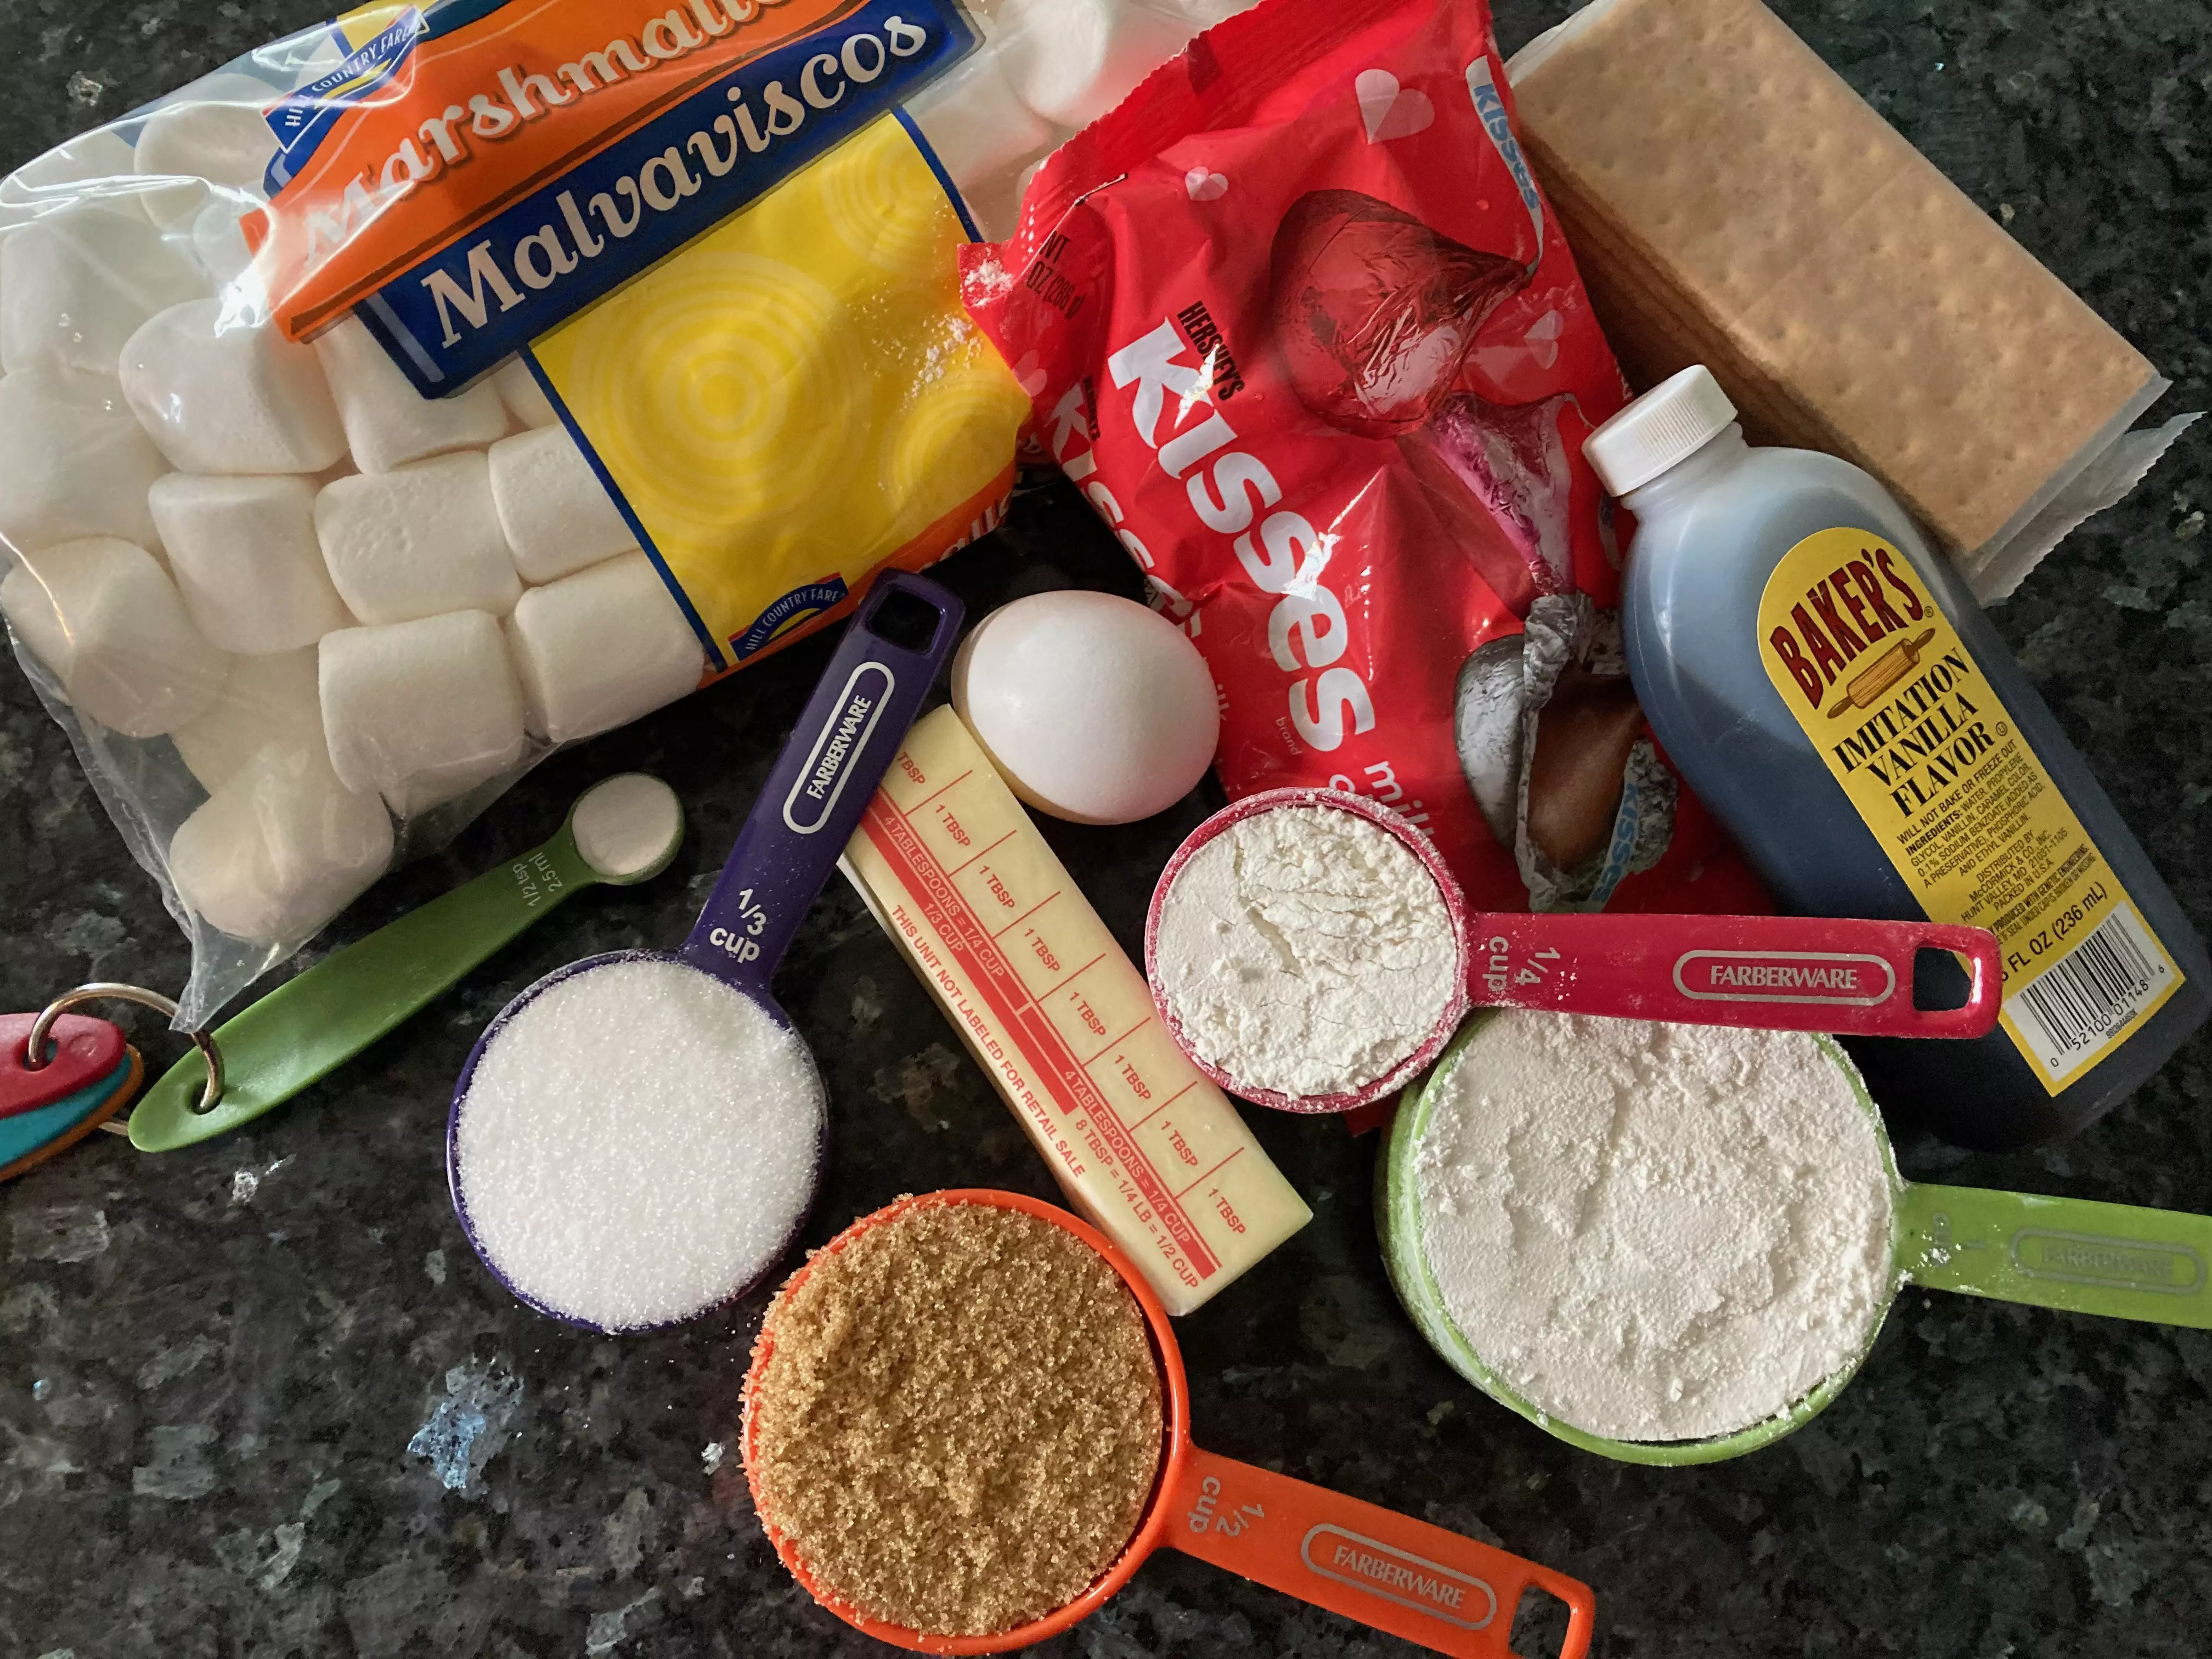 S'Mores cookie ingredients